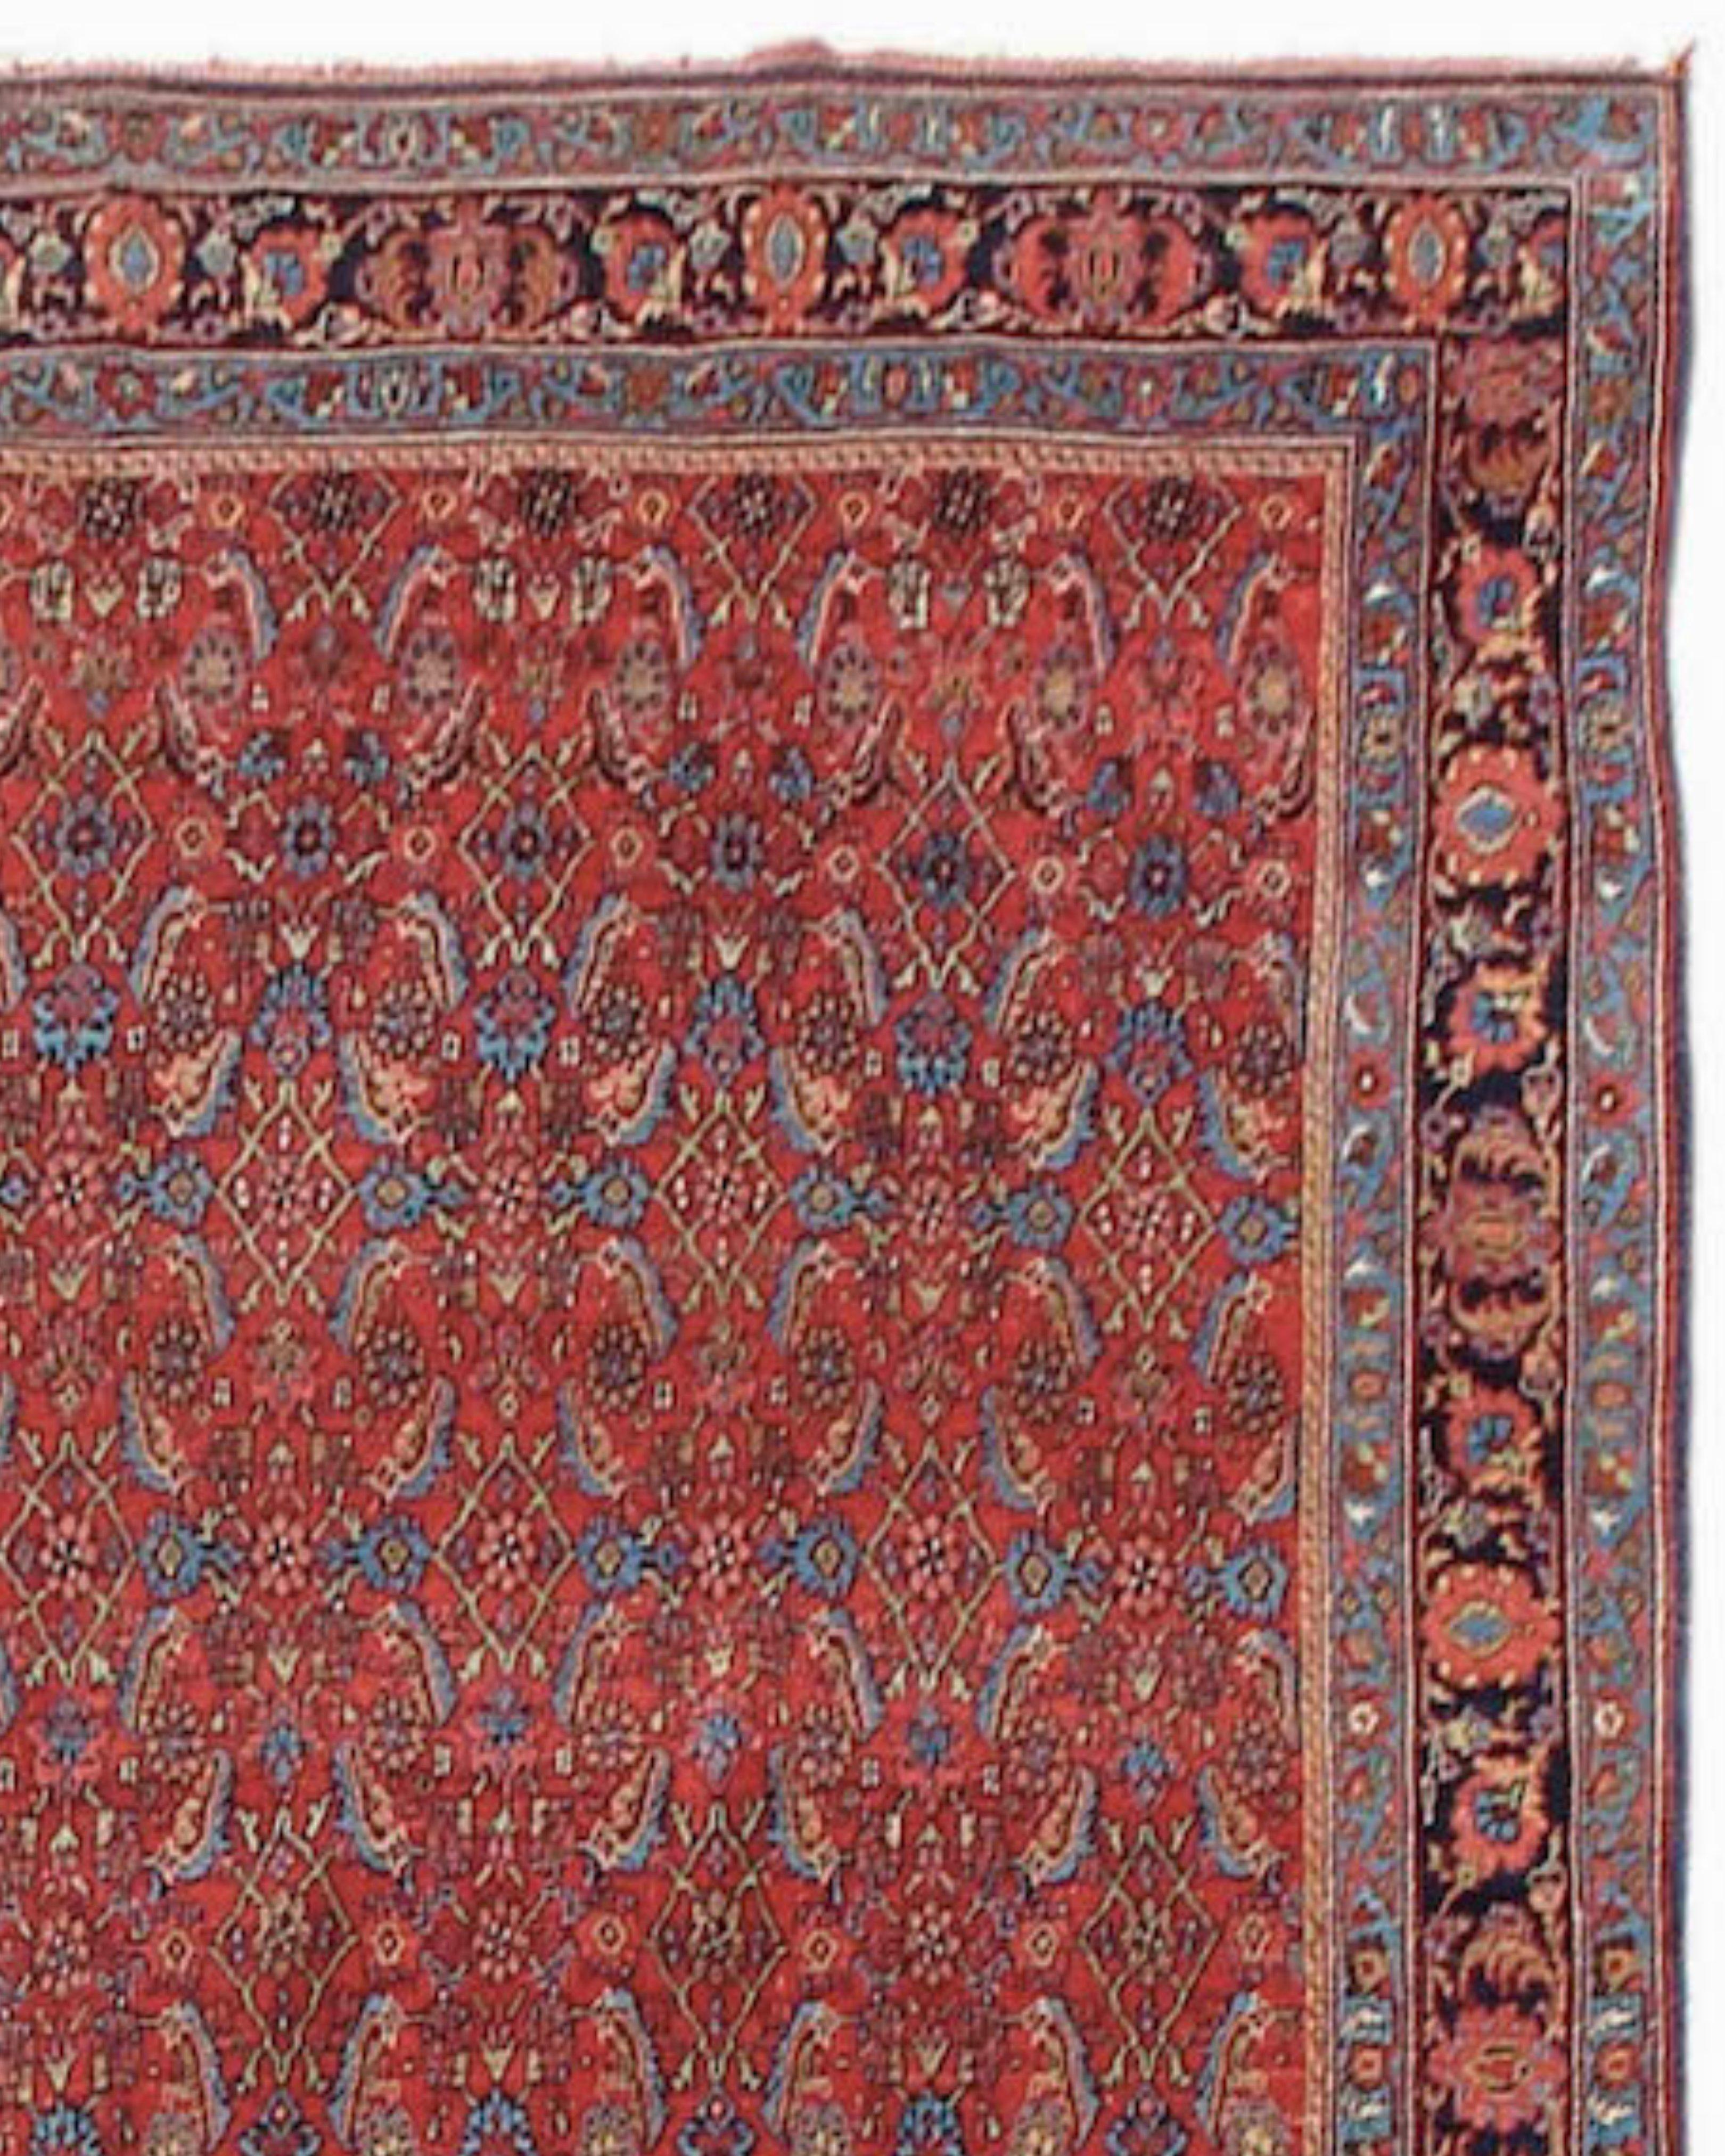 Antique Persian Bidjar Rug, Early 20th Century

Additional Information:
Dimensions: 7'7